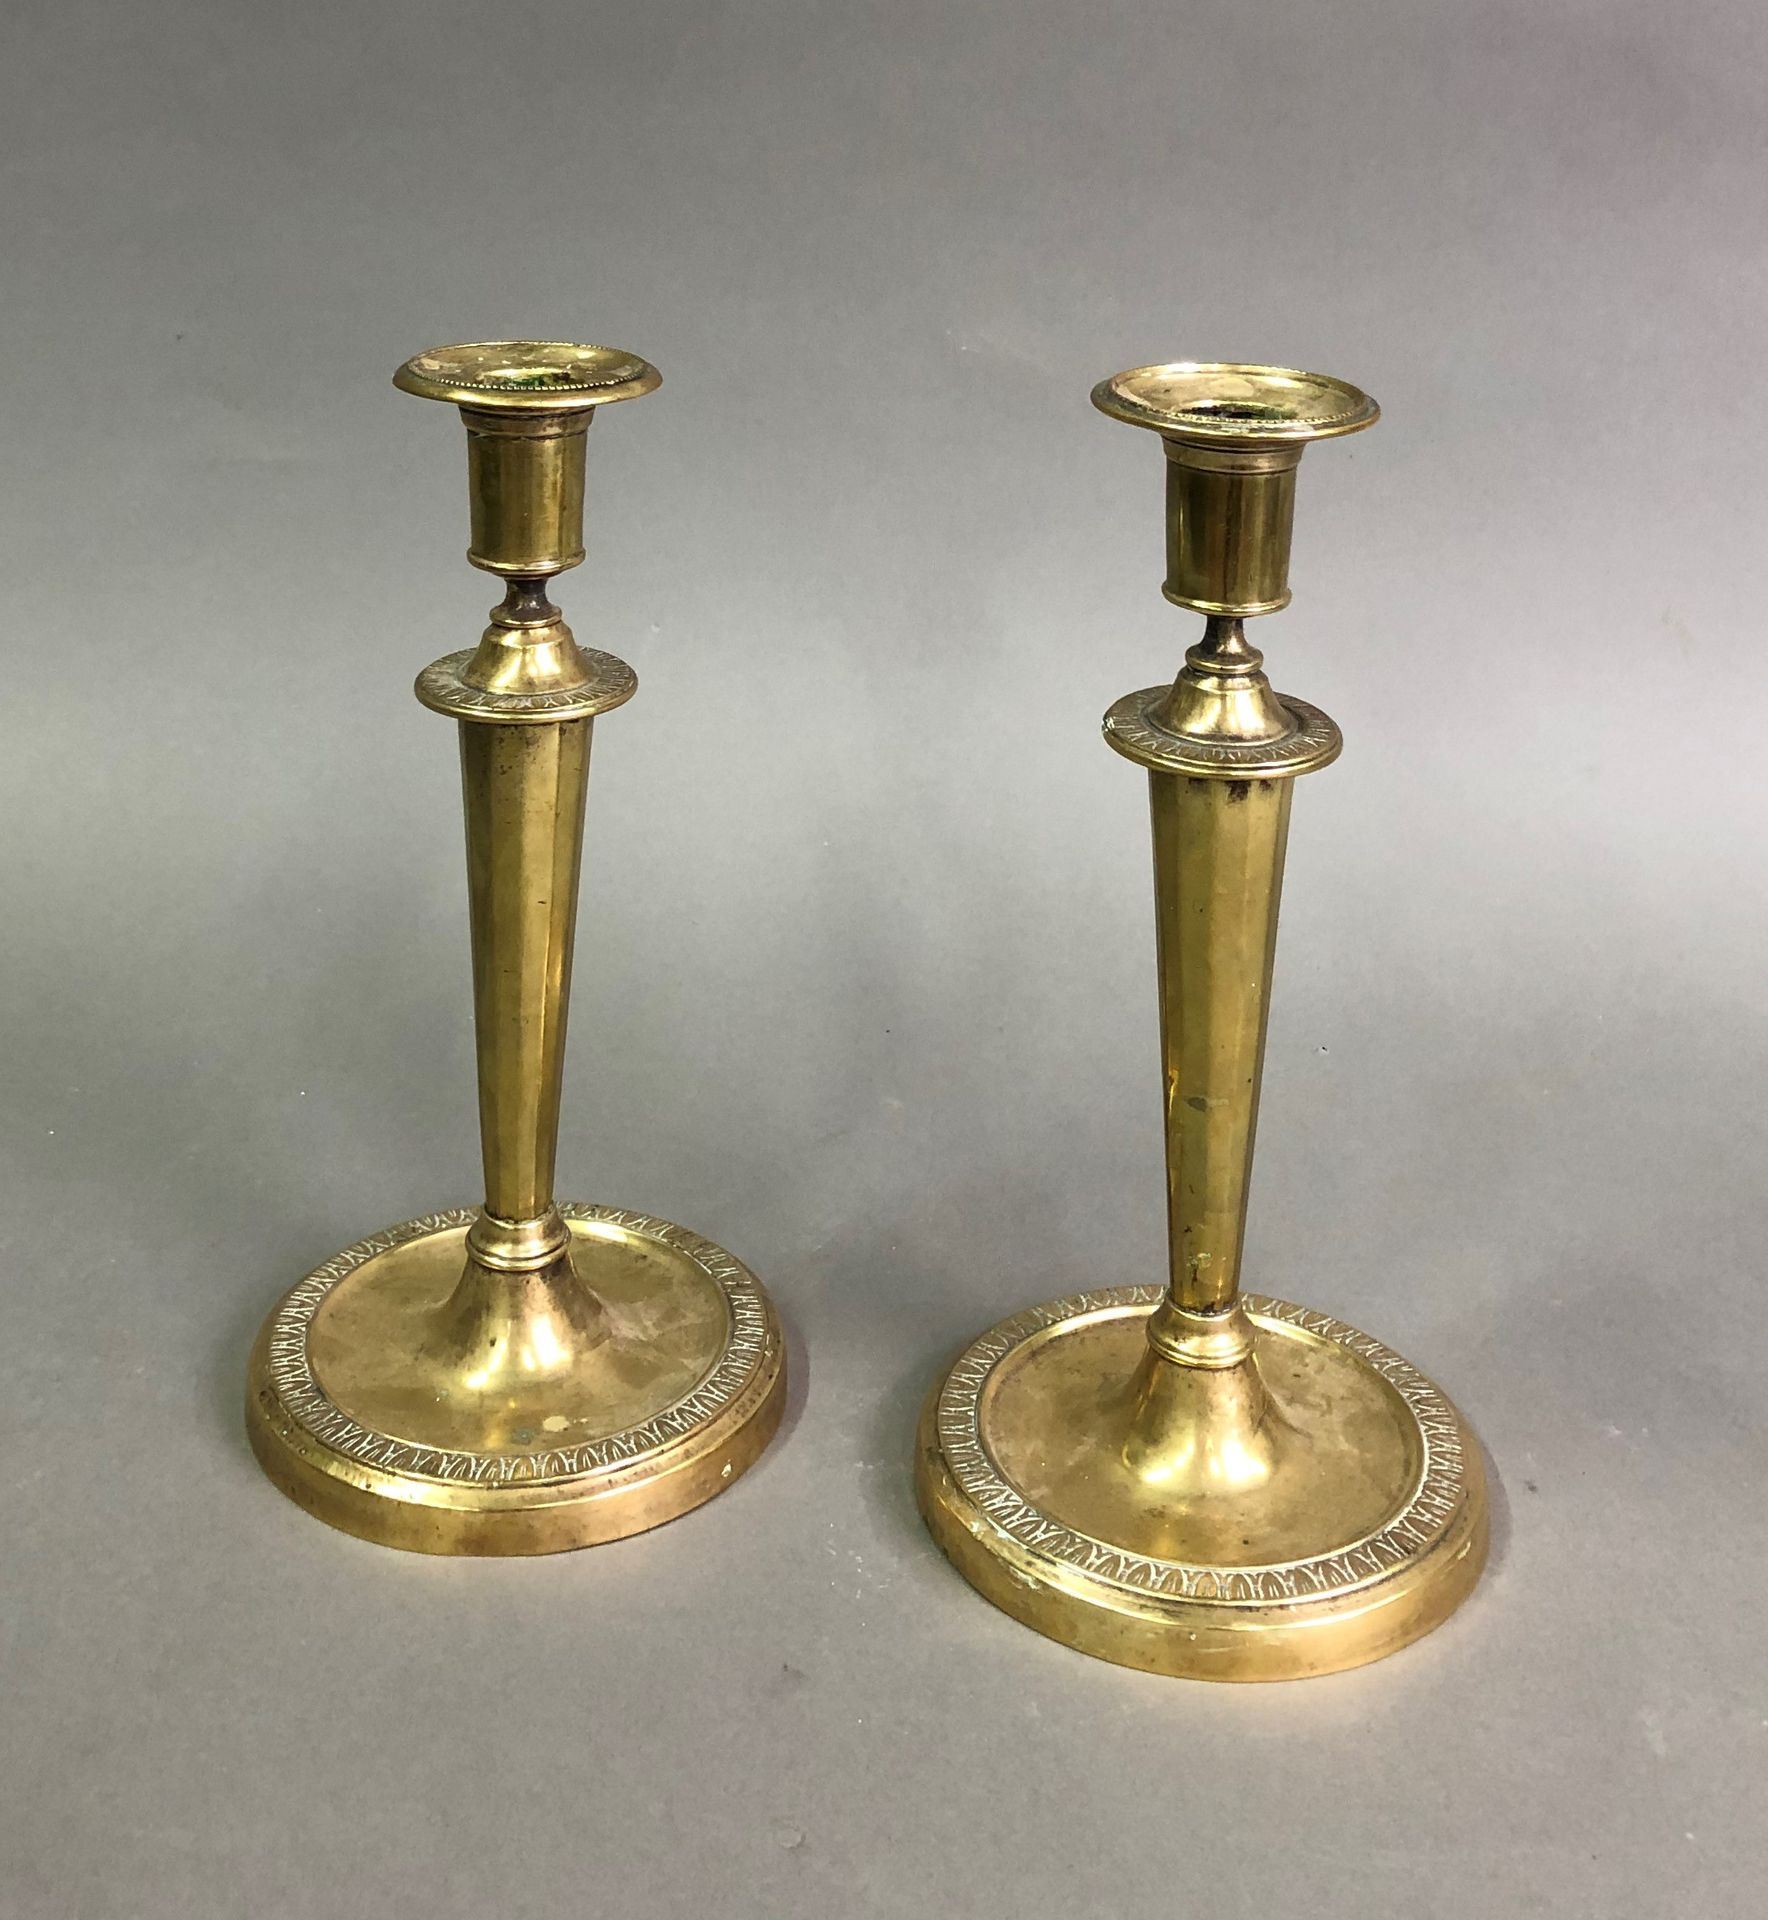 Null 曼尼特包括一对铜制烛台，一个路易十五风格的烛台，一个铜制盖罐和一对路易十五风格的双灯烛台。

磨损和冲击